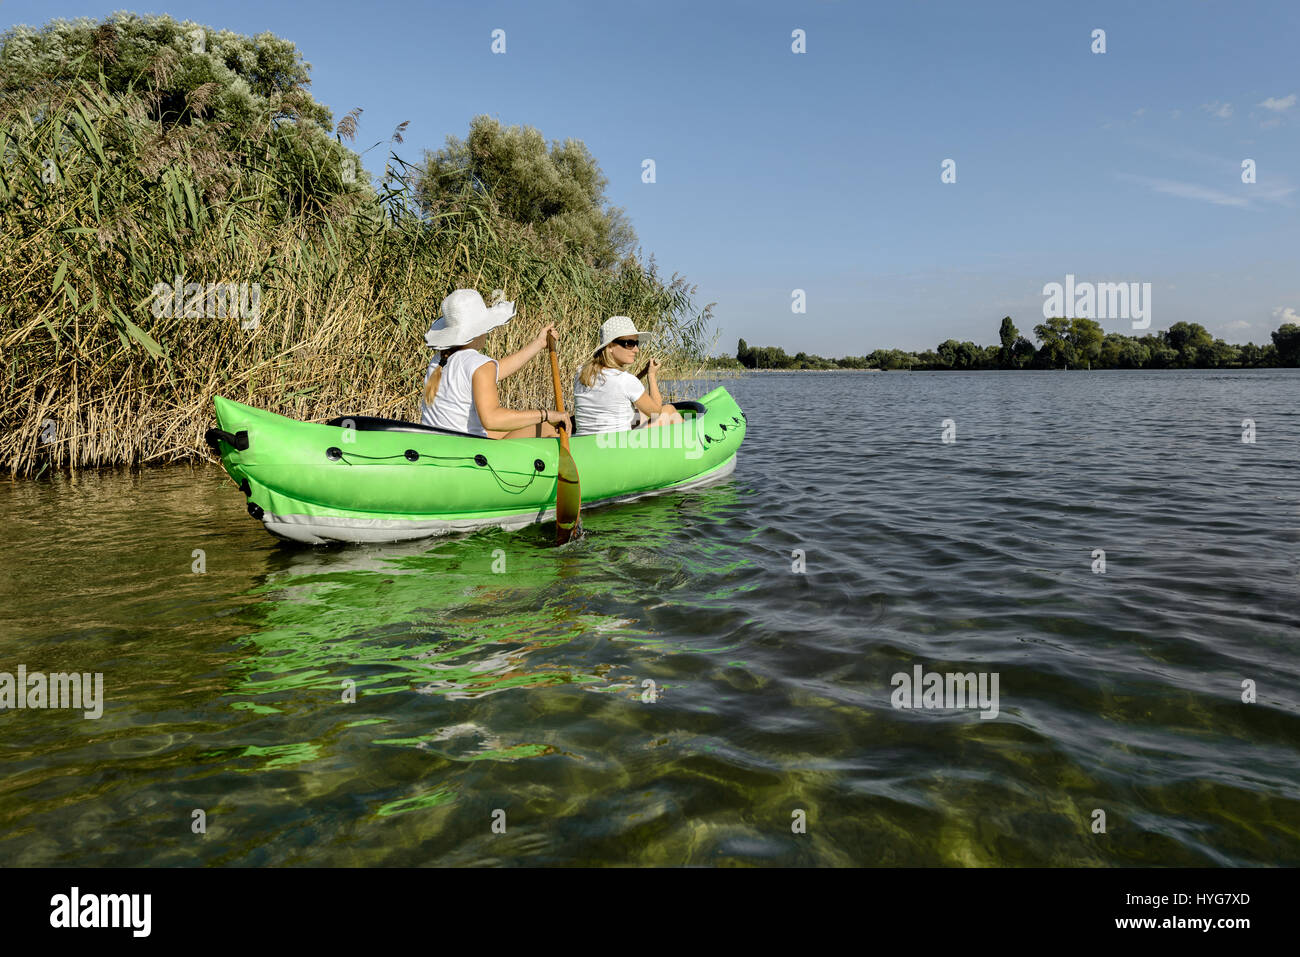 Woman paddling in kayak on tranquil lake river scenery Stock Photo